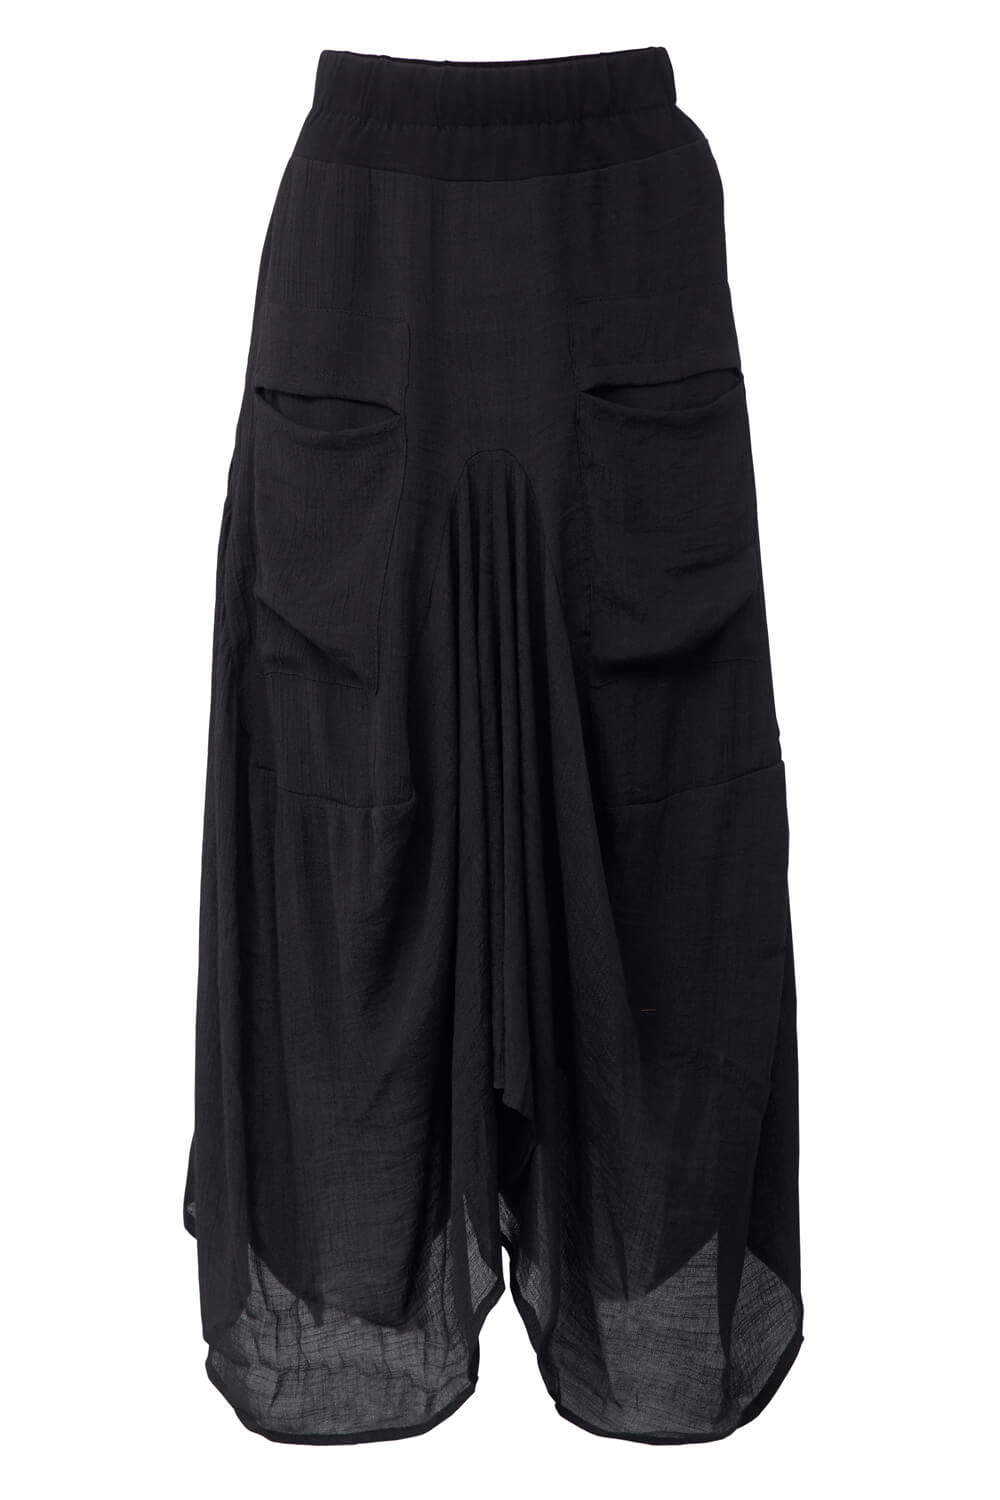 Izabel London Floaty Sheer Skirt in - Roman Originals UK